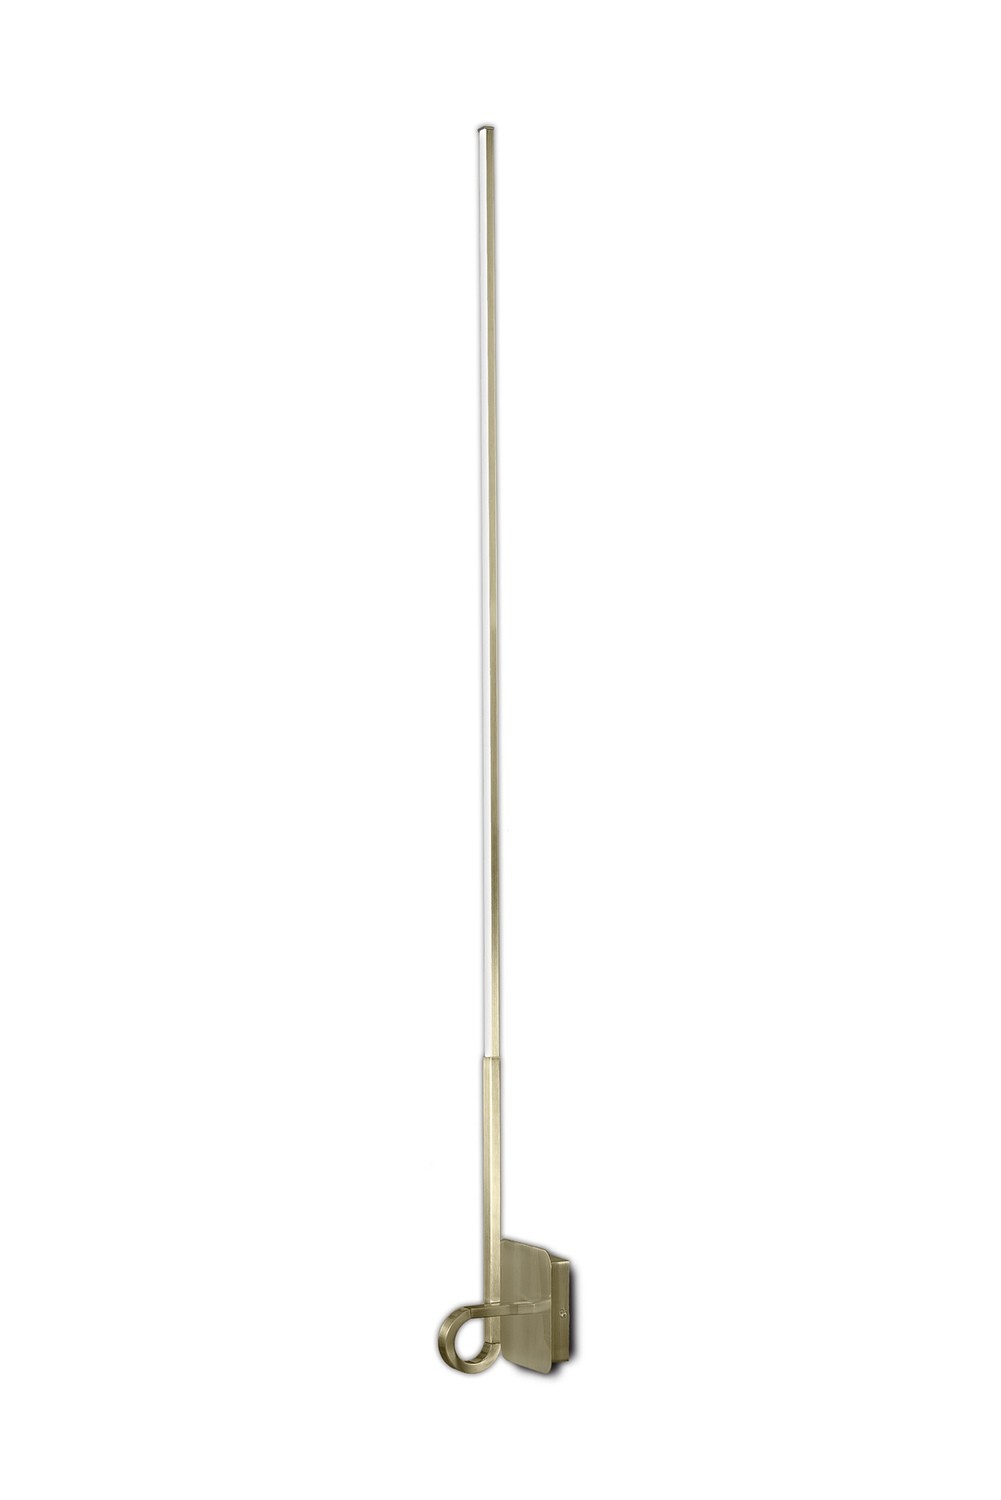 Cinto Wall Lamp 151cm, 20W LED, 3000K, 1600lm, Antique Brass, 3yrs Warranty